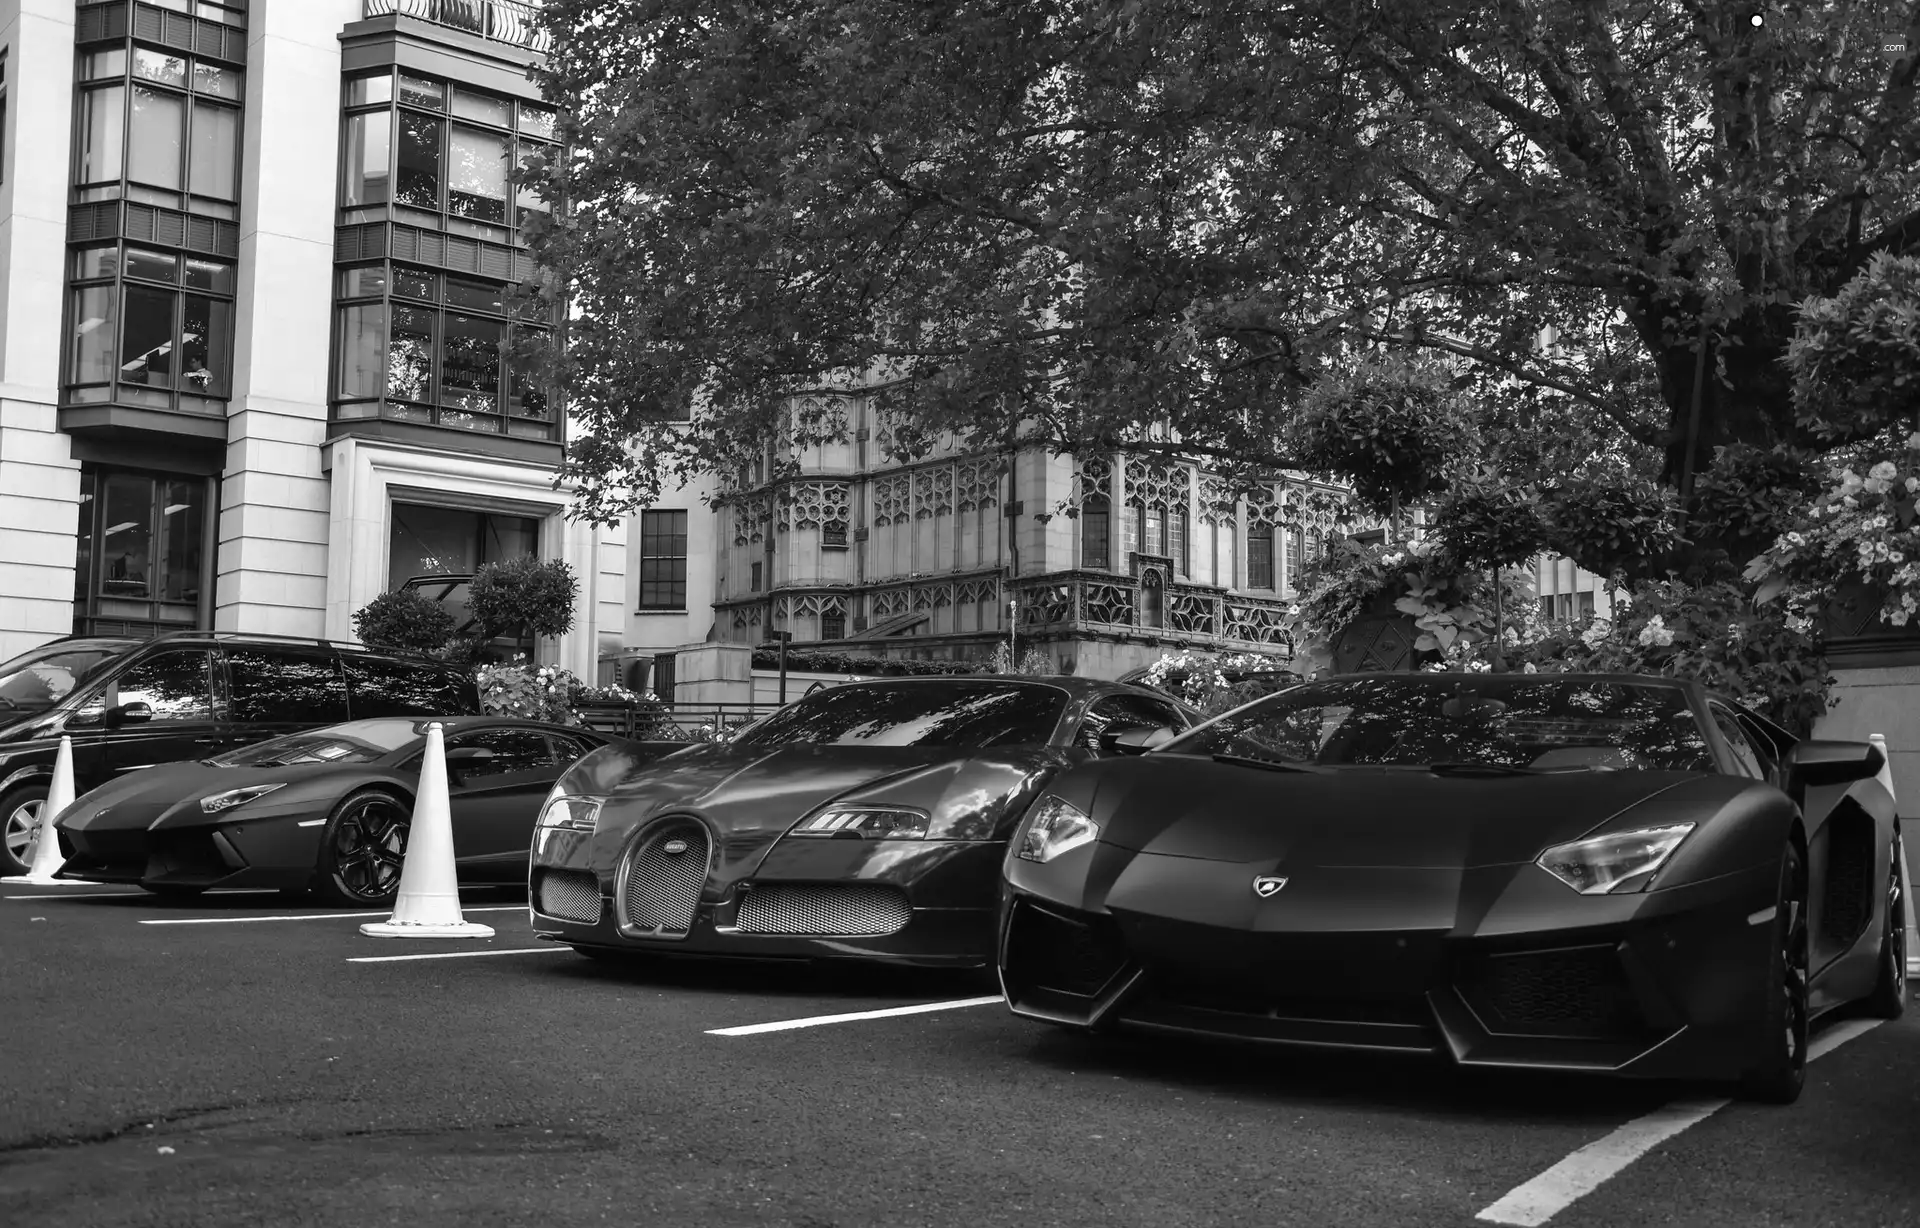 blue, Black, Lamborghini Aventador, Bugatti Veyron